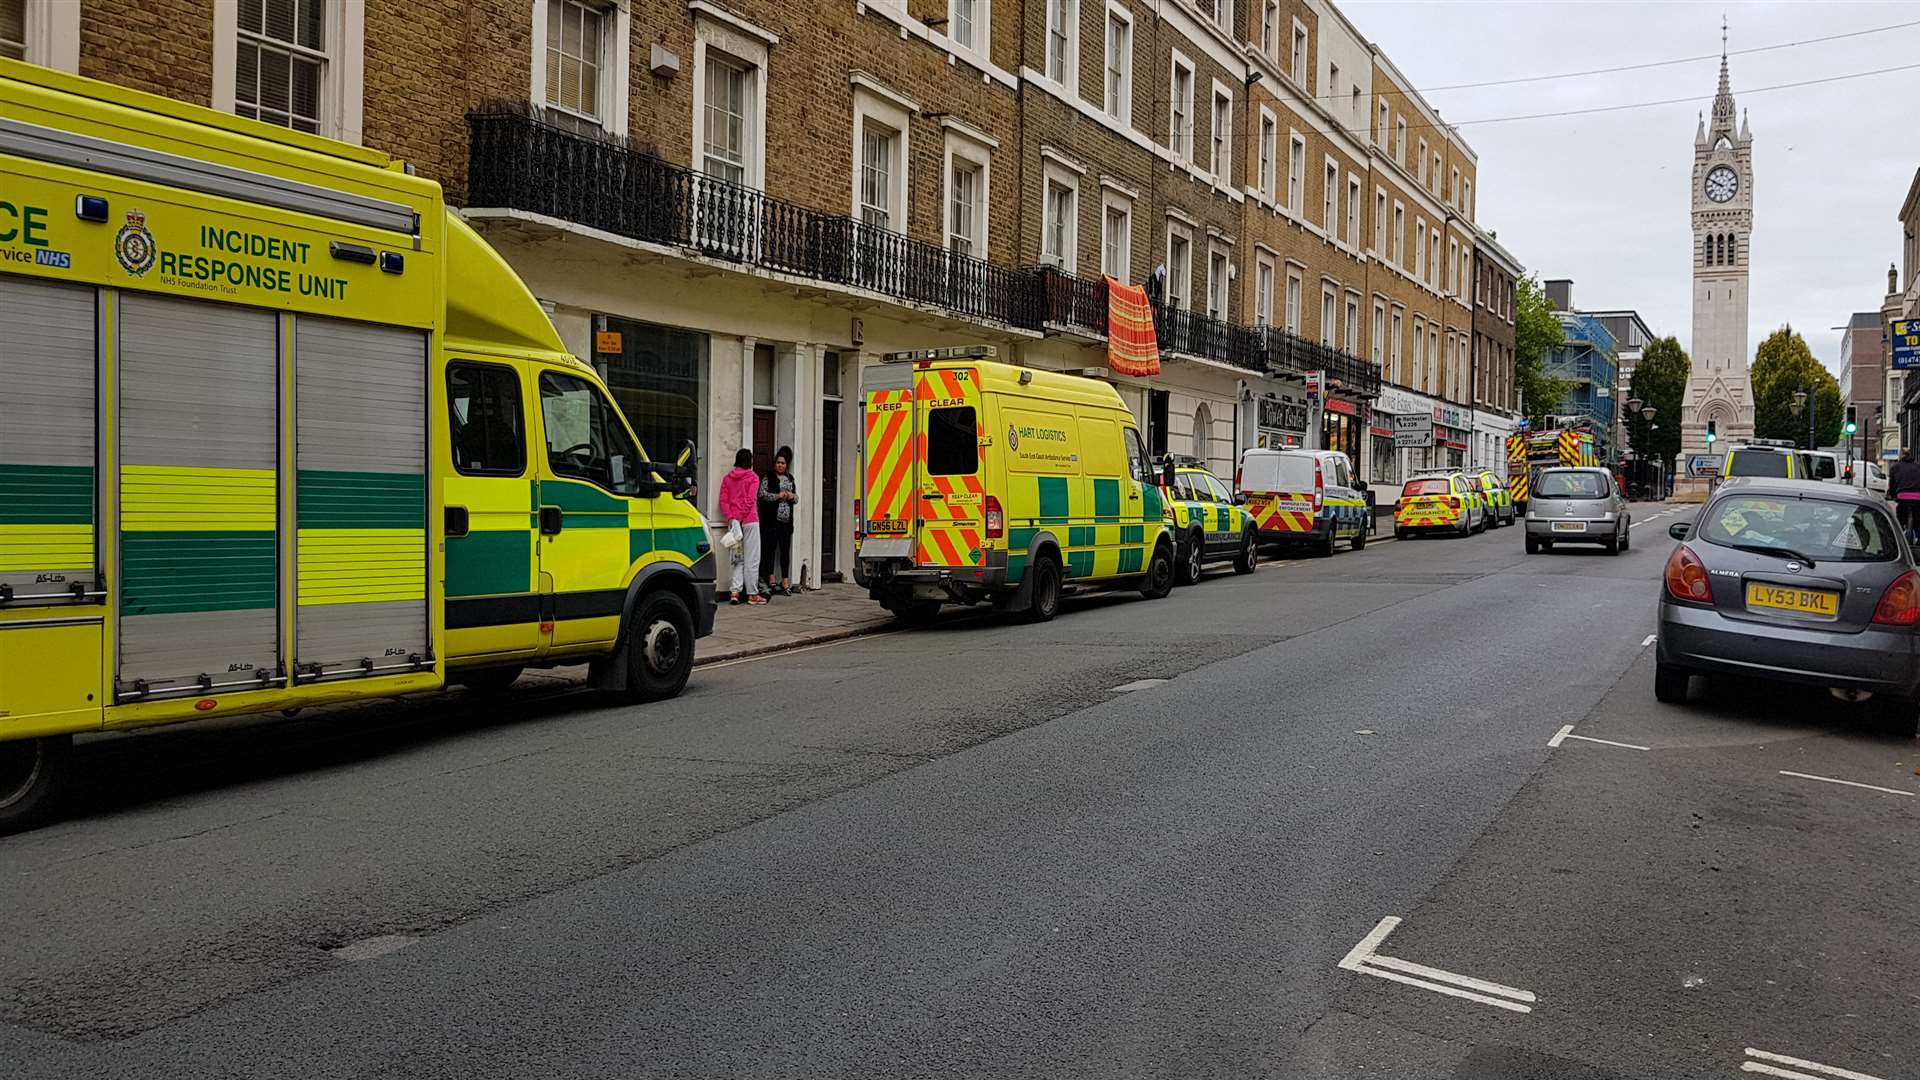 Six ambulance service vehicles were seen in Harmer Street